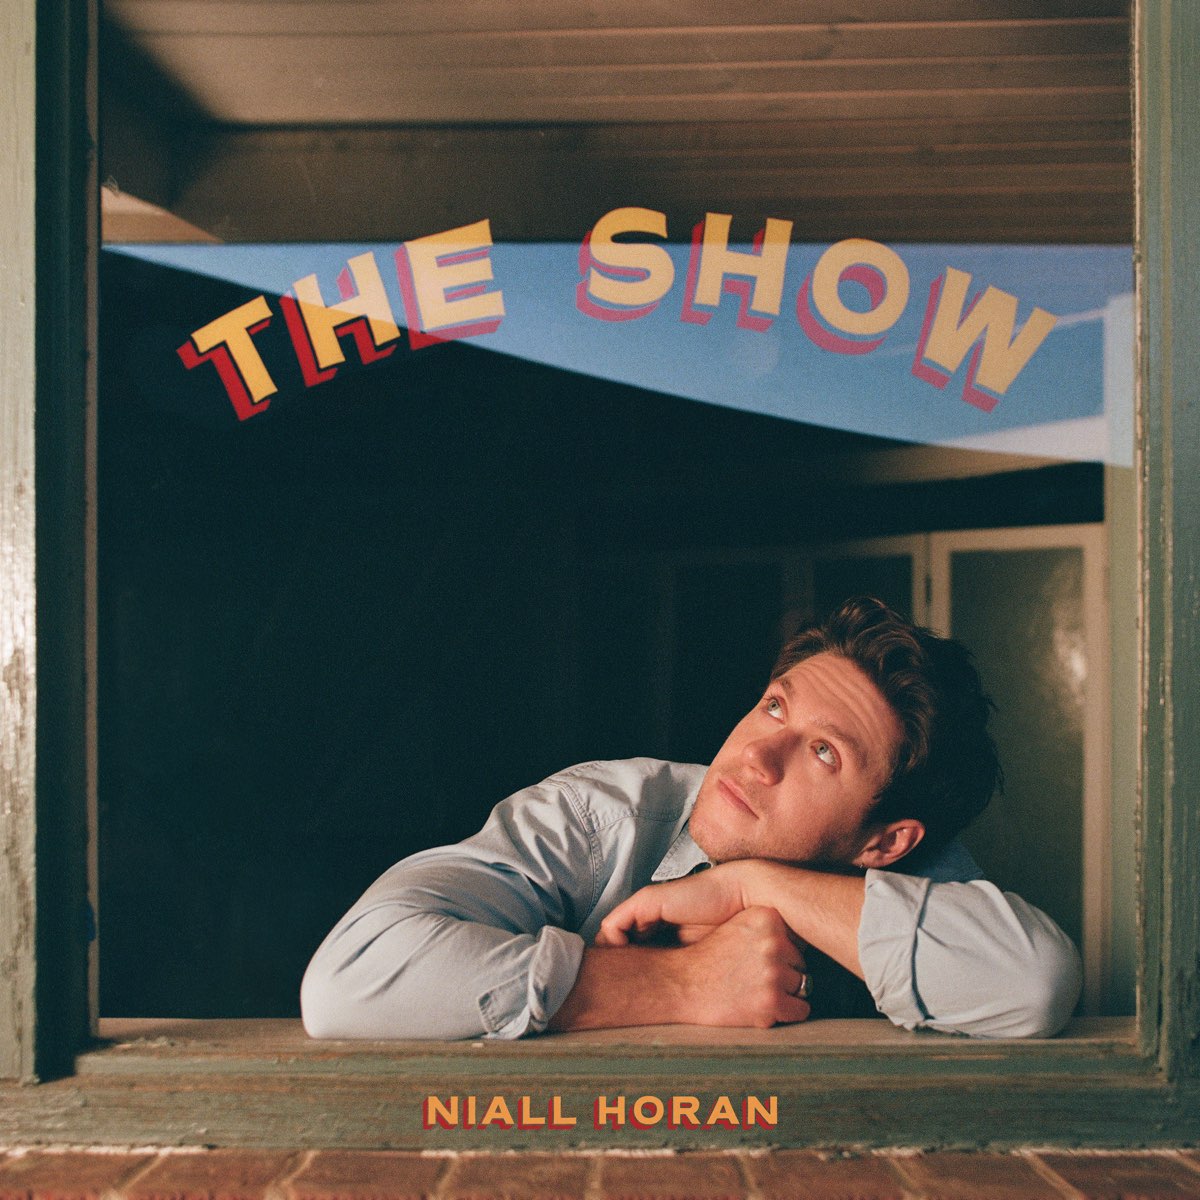 Niall Horan The Show cover artwork